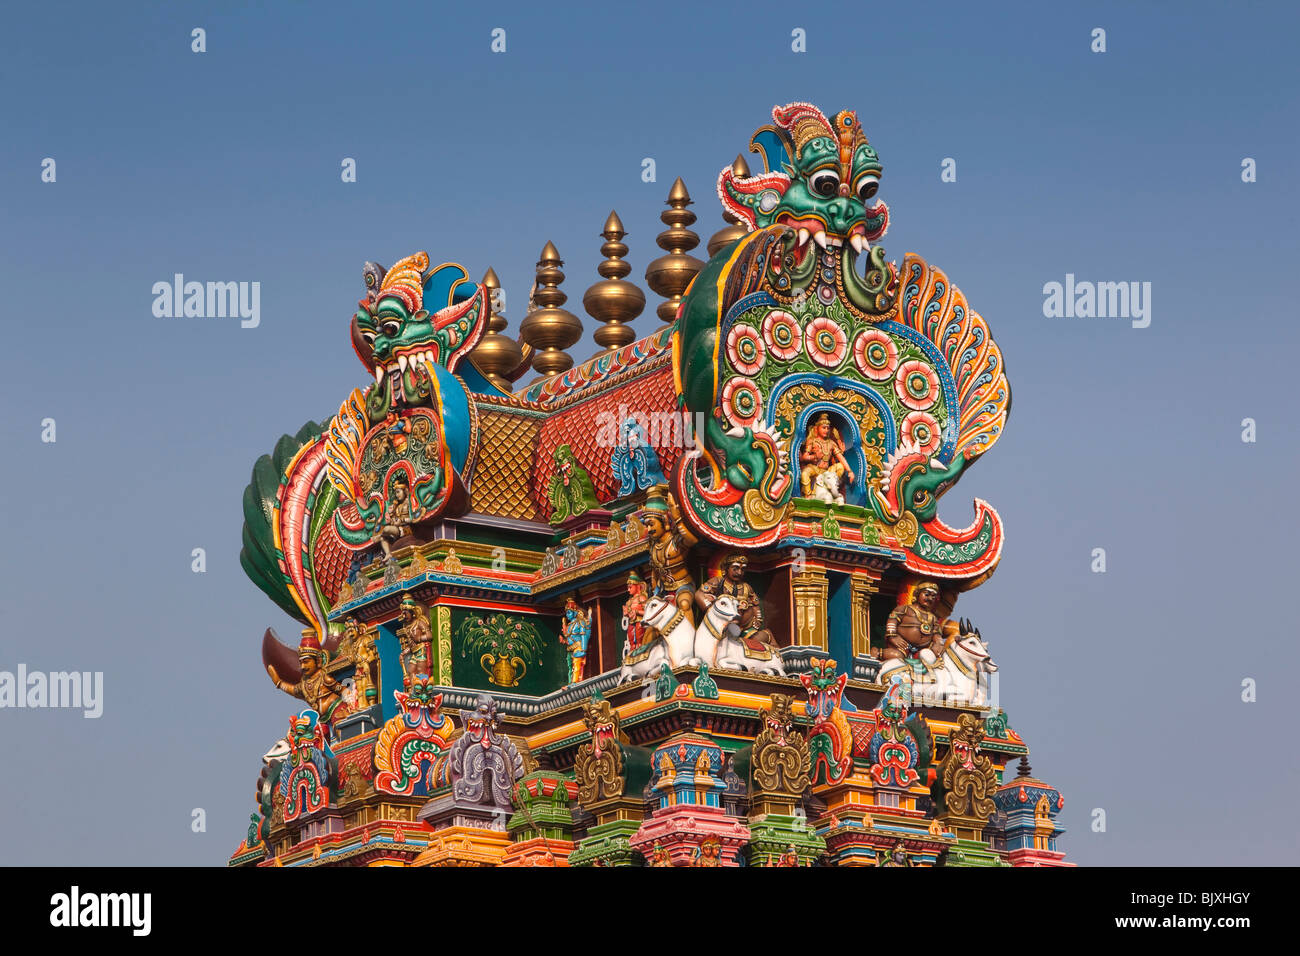 India, nello Stato del Tamil Nadu, Madurai, Sri Meenakshi Temple, restaurato recentemente centrale santuario Sundareshvara gopuram pinnacle Foto Stock